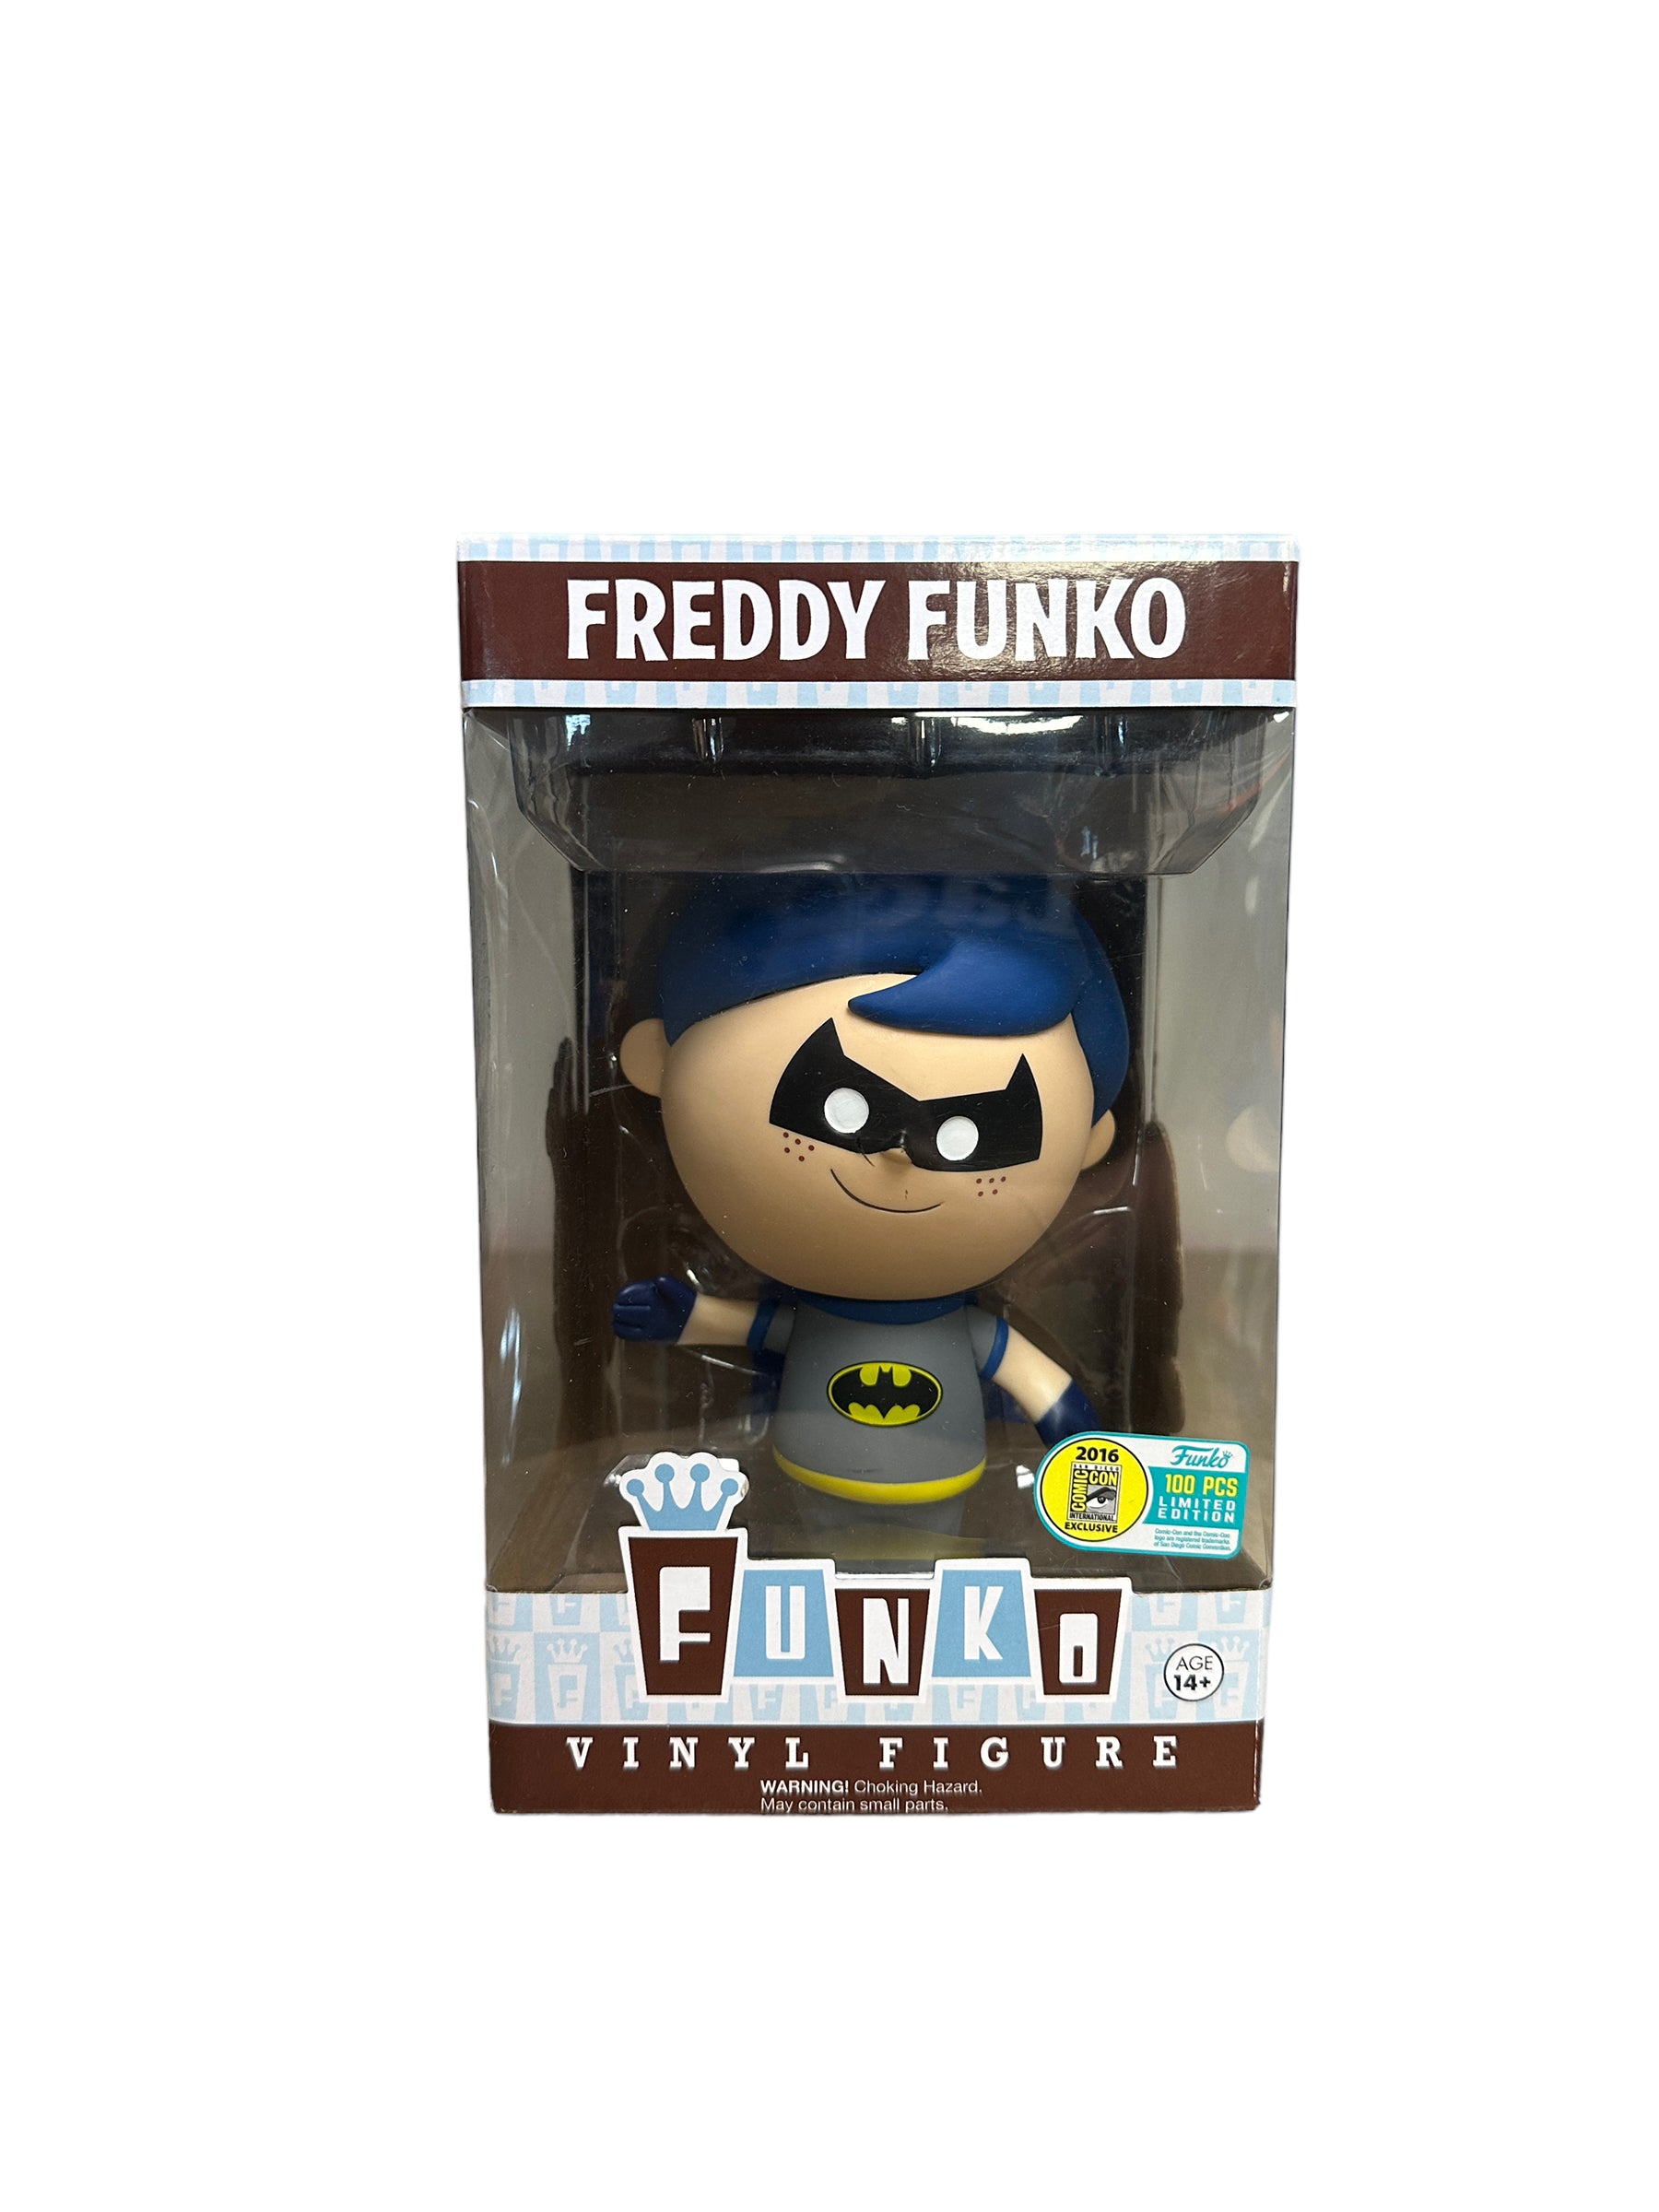 Freddy Funko as Batman (Retro) Retro Vinyl Figure! - DC - SDCC 2016 Exclusive LE100 Pcs - Condition 8.5/10